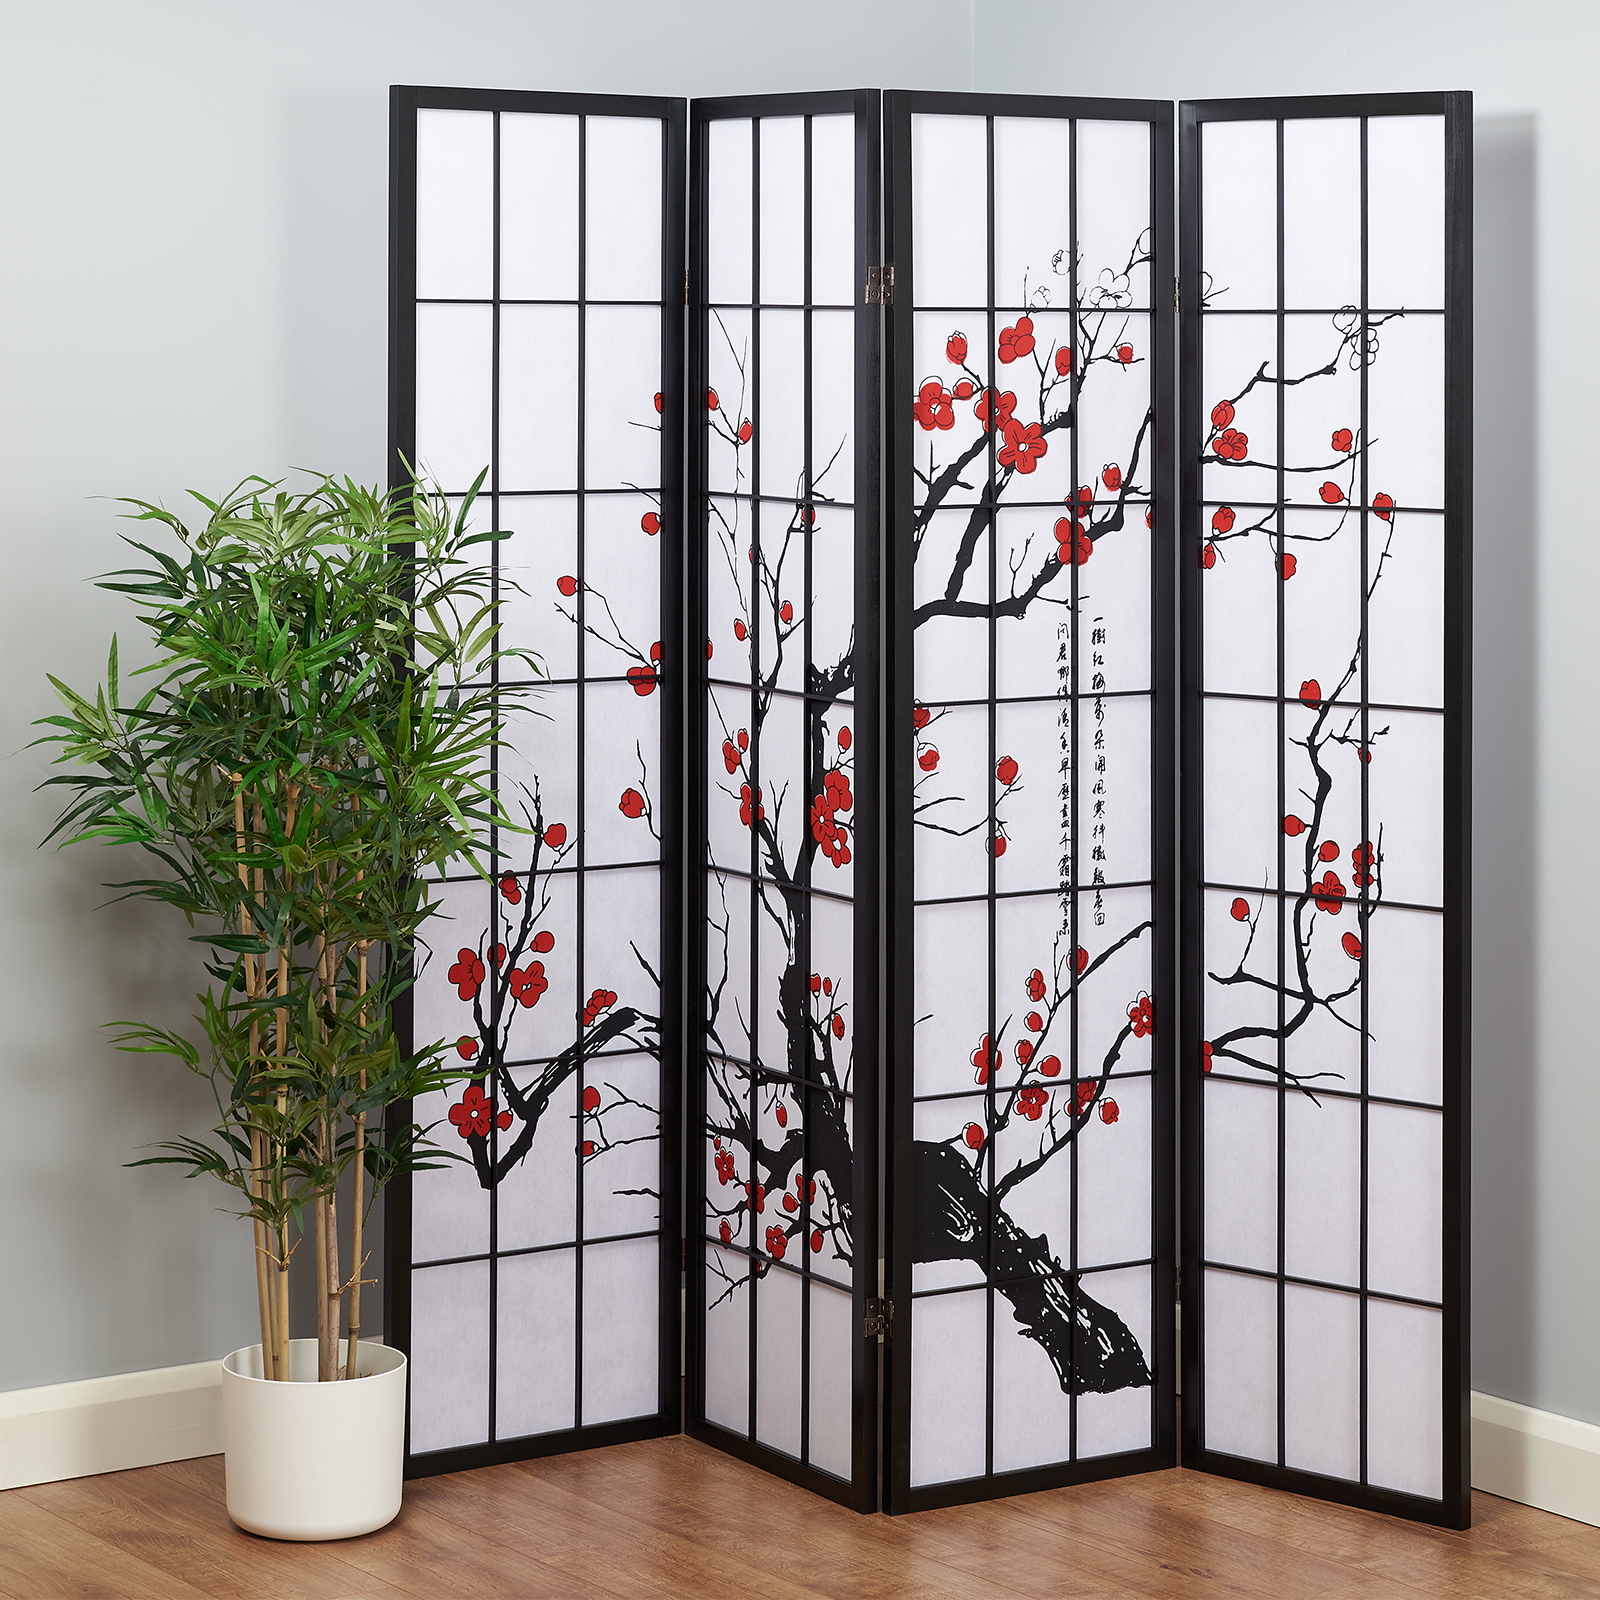 Hartleys-Black-4-Panel-Cherry-Blossom-Print-Japanese-Room-Divider-in-a-Living-Room-2571612349.jpeg